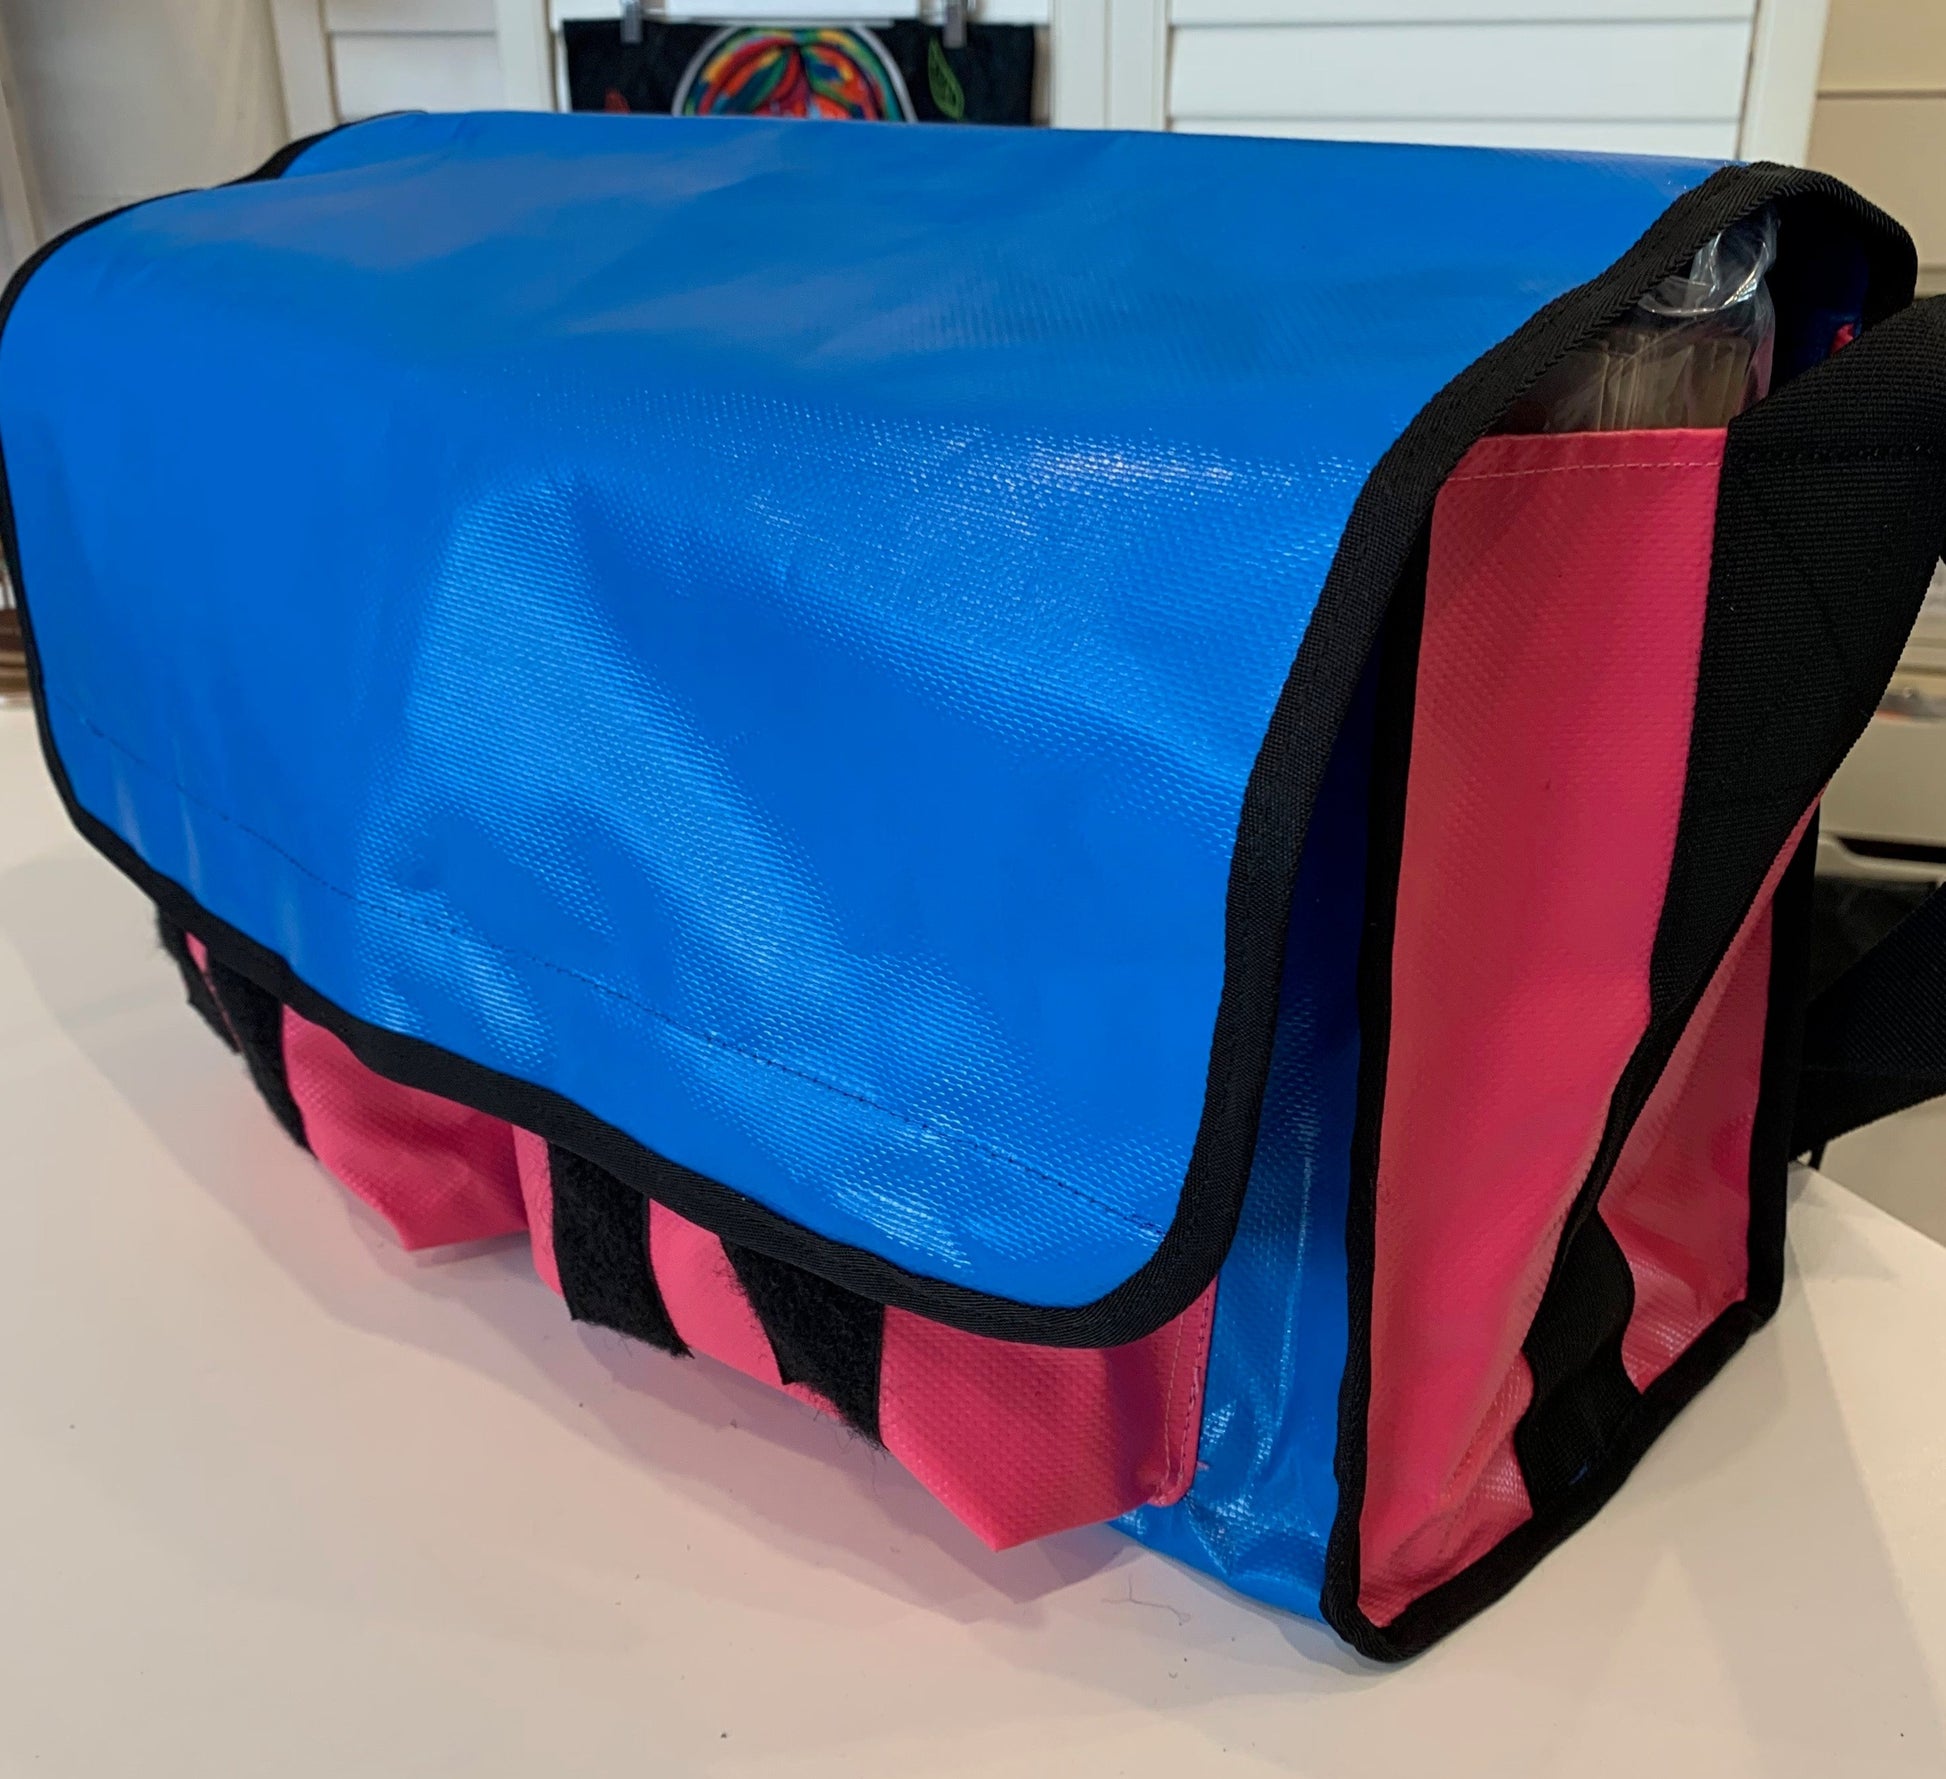 CribBags Medium Blue and Pink Crib bag. Tough Vinyl Construct 2 pockets outside, Document pocket inside